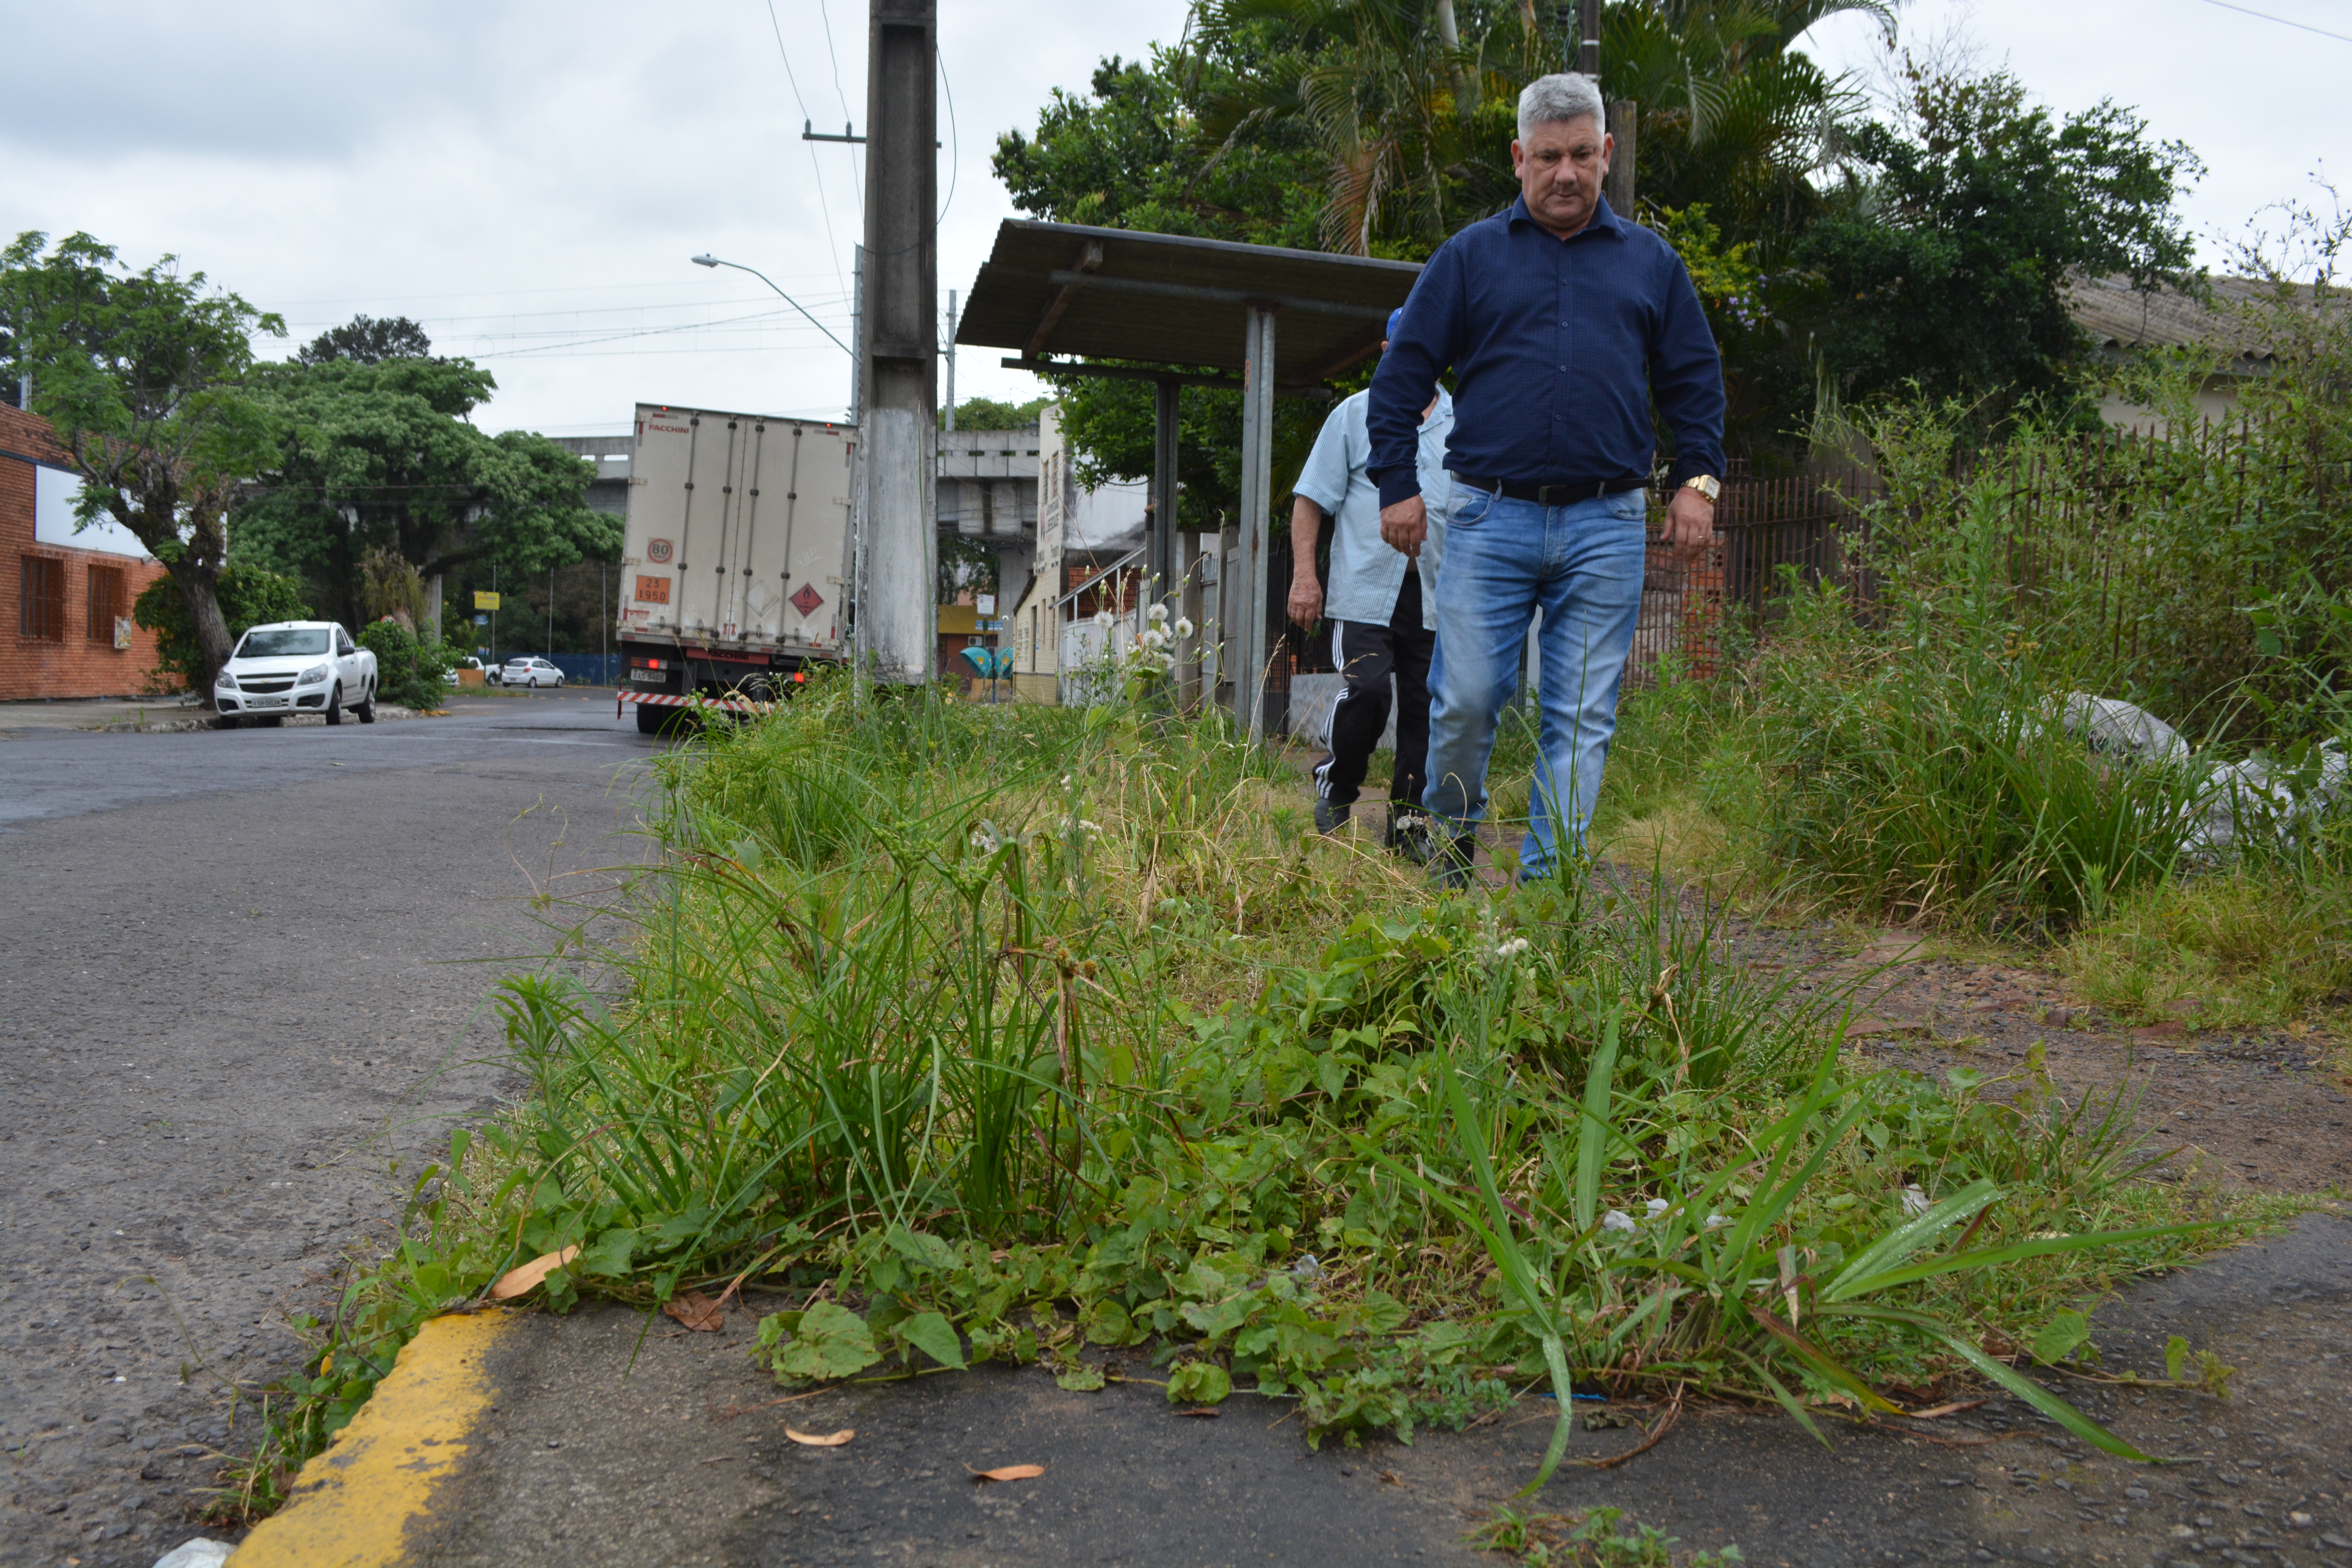 31/10/2018 - Vereador Nor Boeno solicita limpeza em parada de ônibus no bairro Liberdade